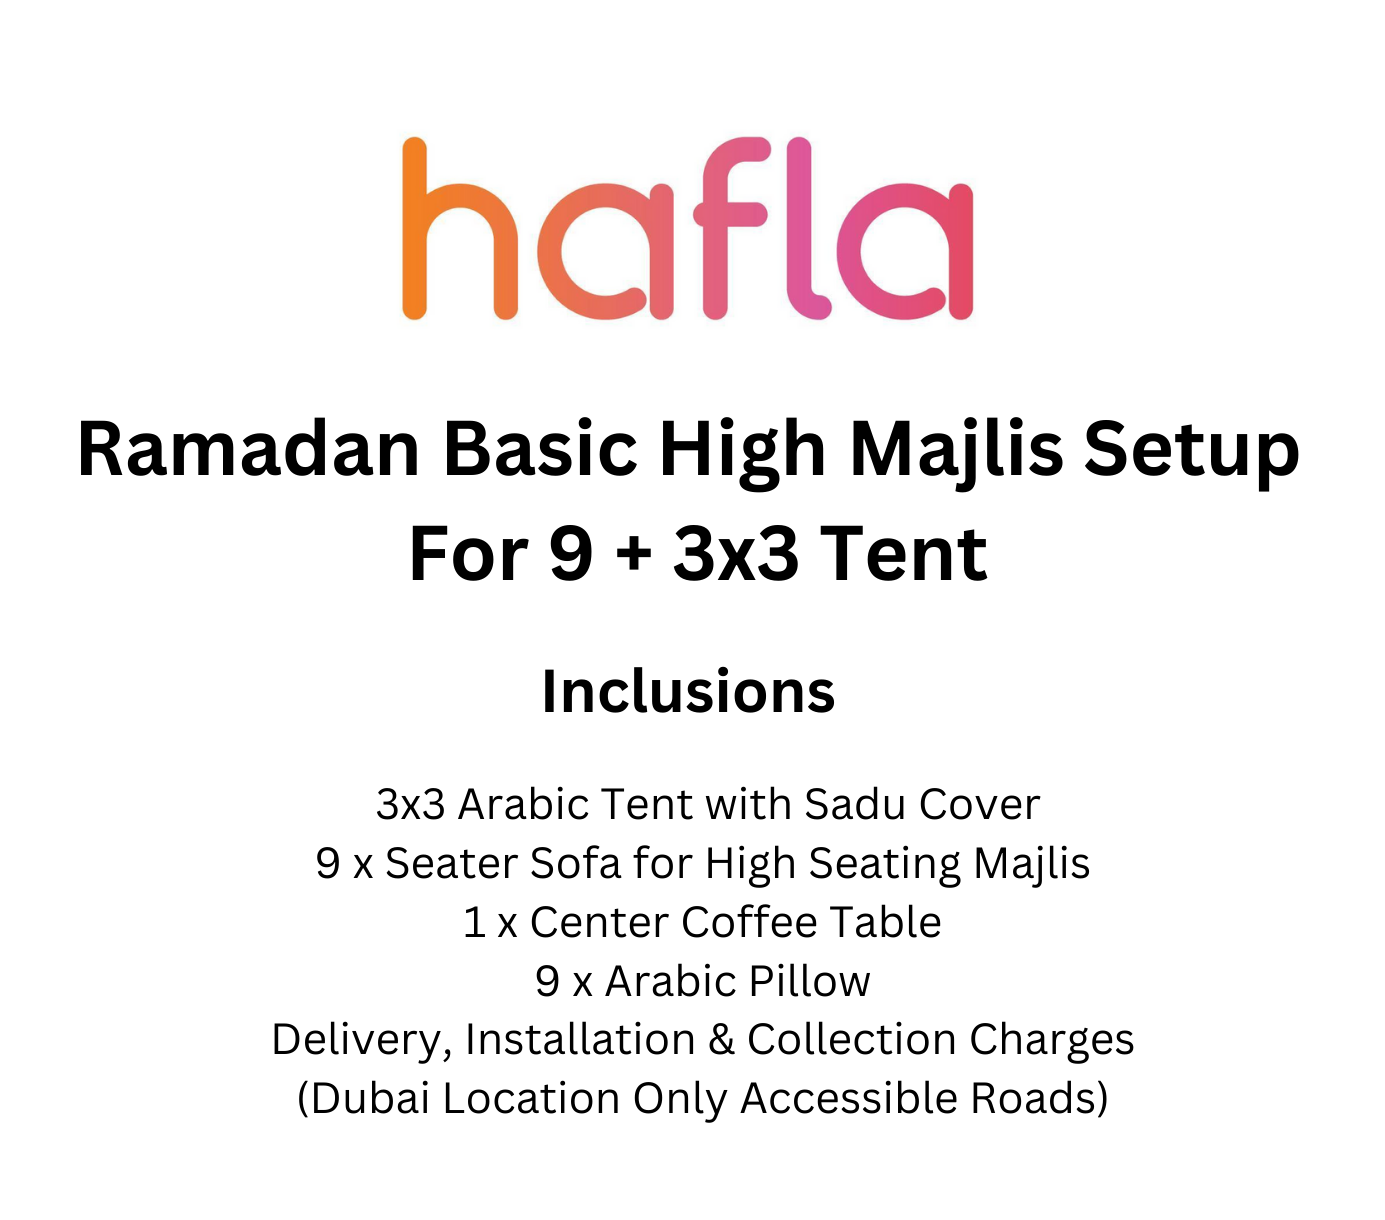 Ramadan Basic Majlis Setup For 9 + 3x3 Tent